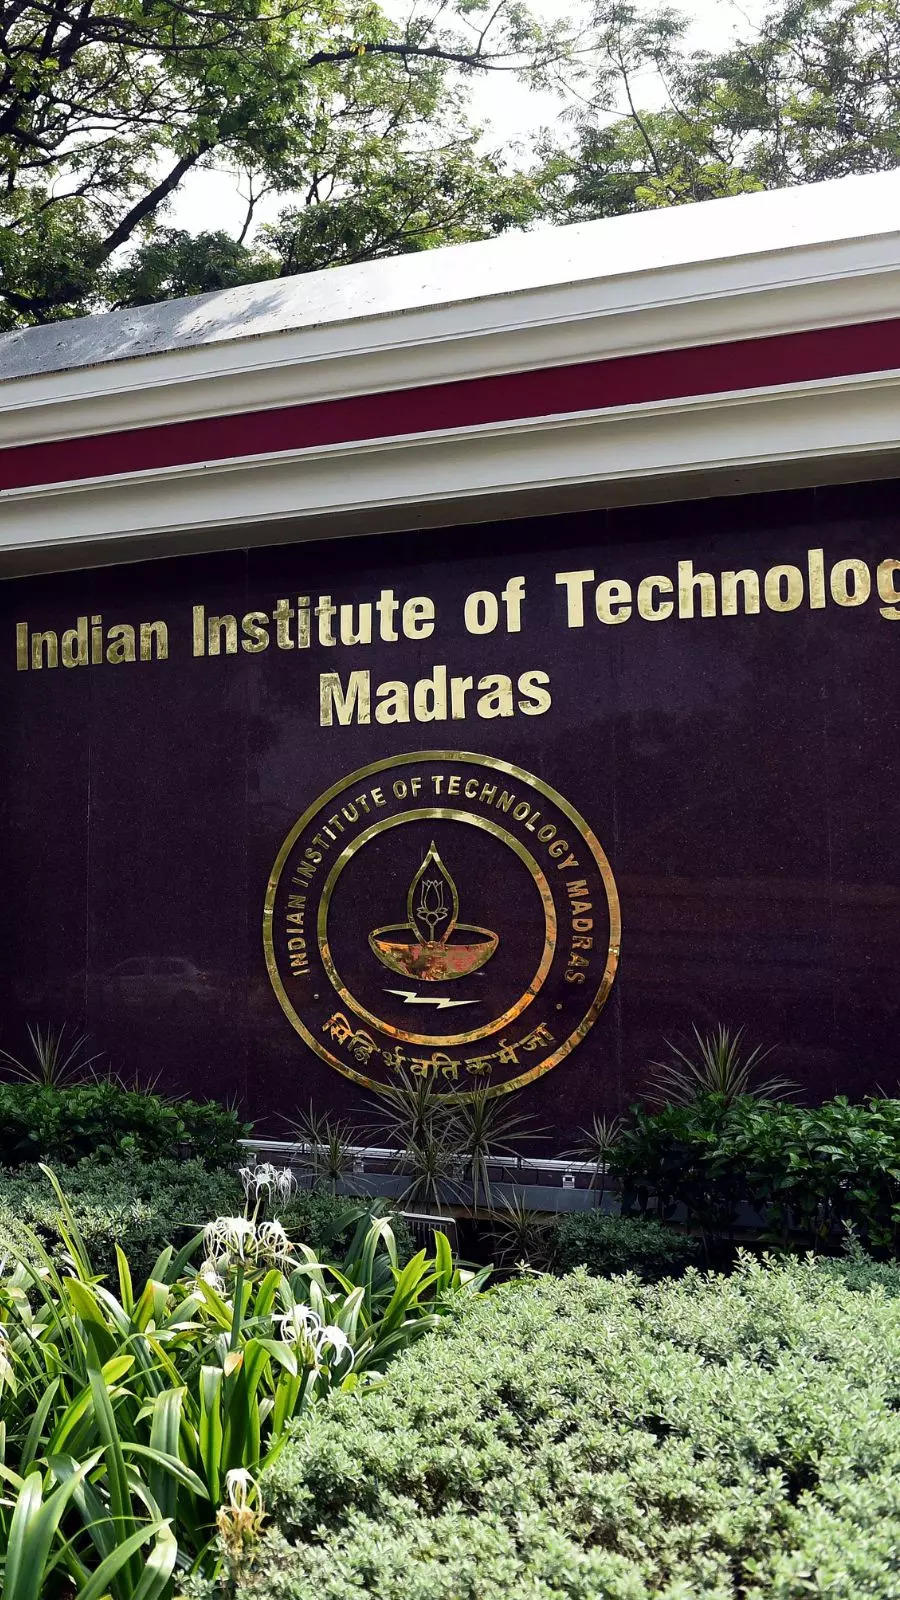 Best IIT colleges in India, as per govt